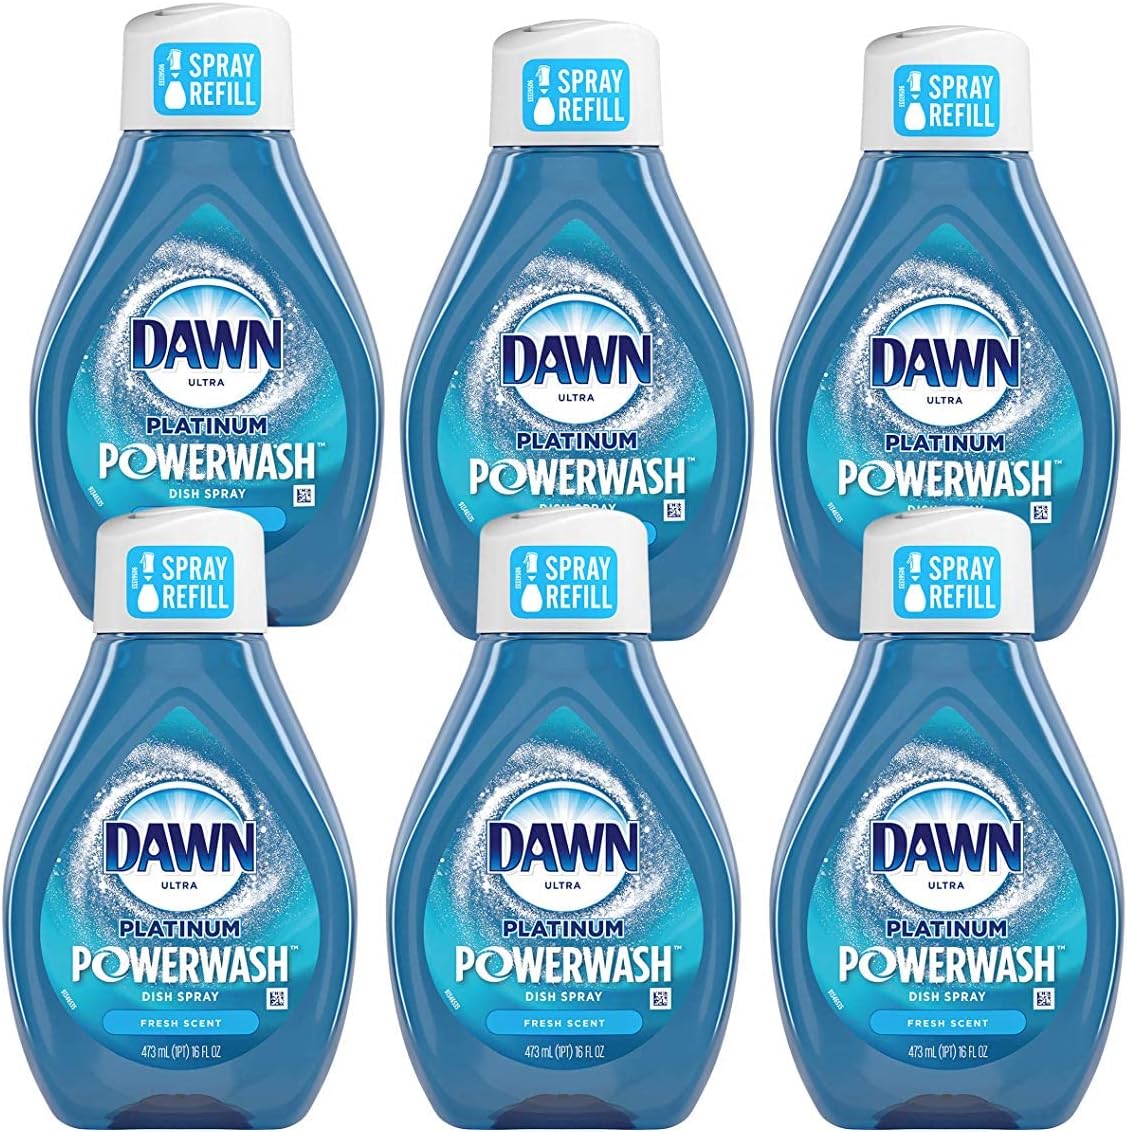 Dawn Platinum Powerwash Dish Spray Fresh Scent Refill - 6 Pack